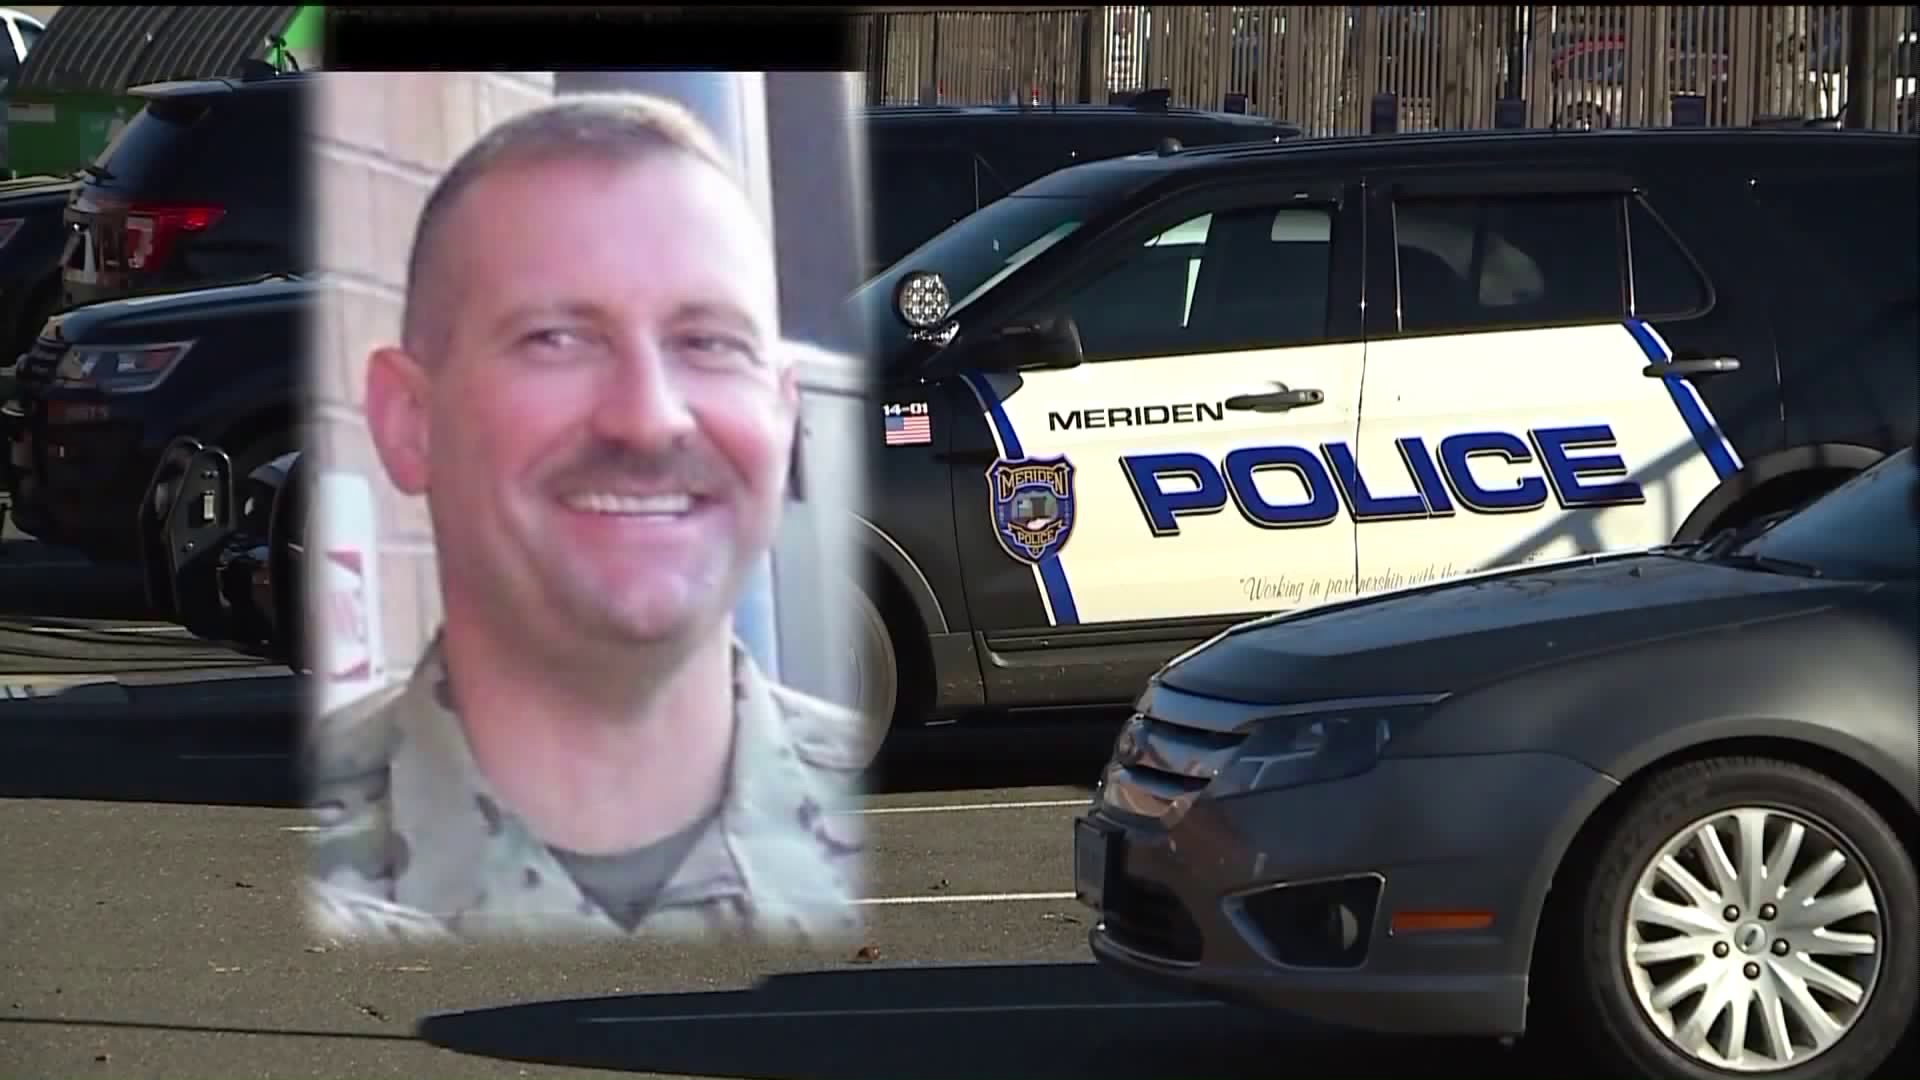 Meriden police Lieutenant dies on Christmas Day